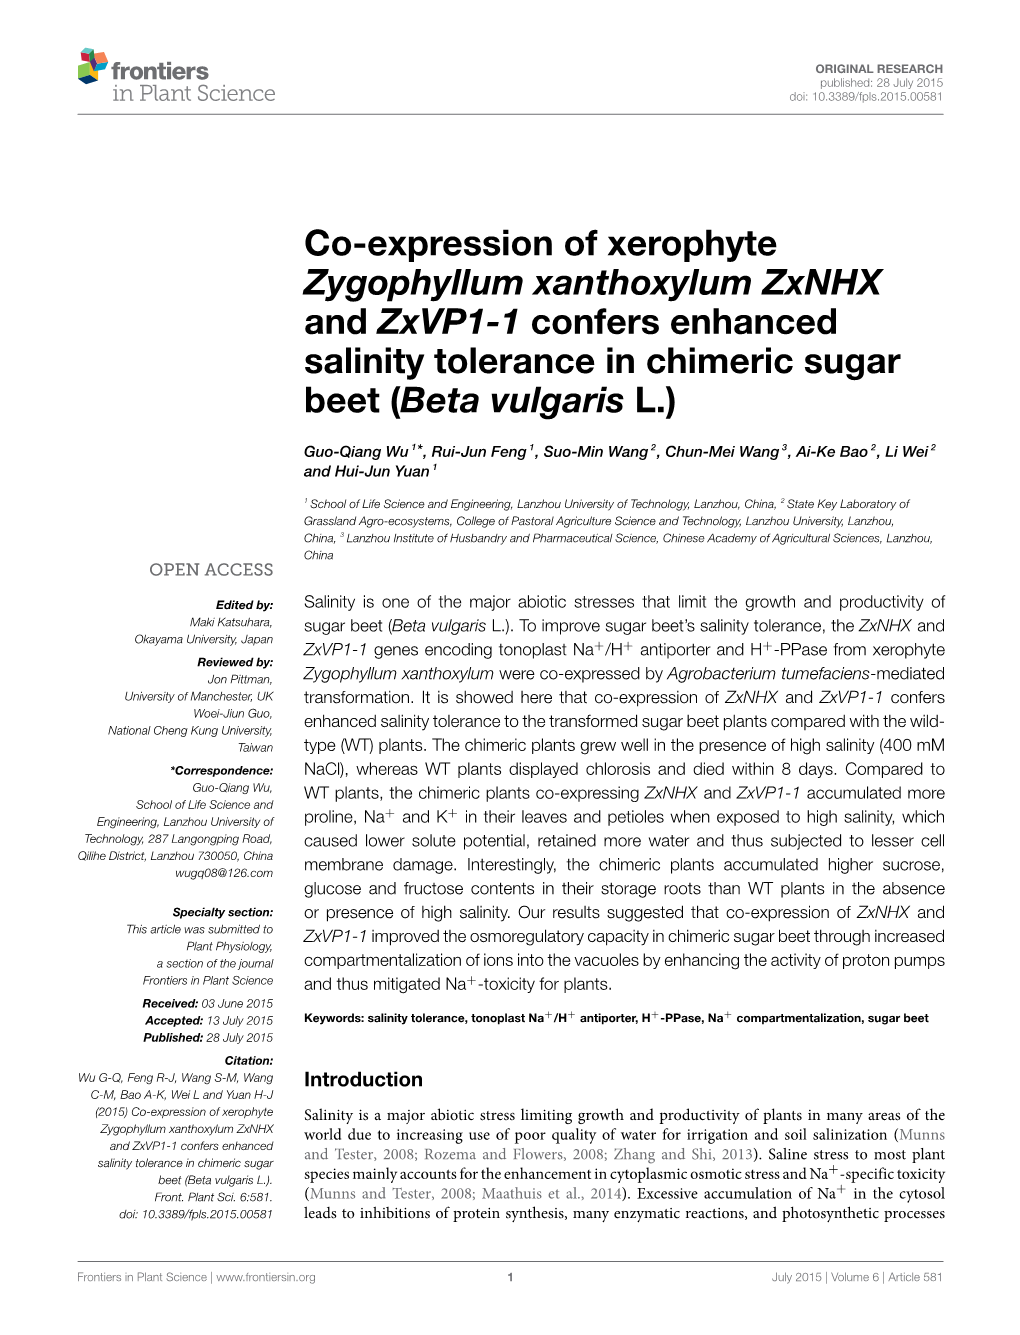 Co-Expression of Xerophyte Zygophyllum Xanthoxylum Zxnhx and Zxvp1-1 Confers Enhanced Salinity Tolerance in Chimeric Sugar Beet (Beta Vulgaris L.)